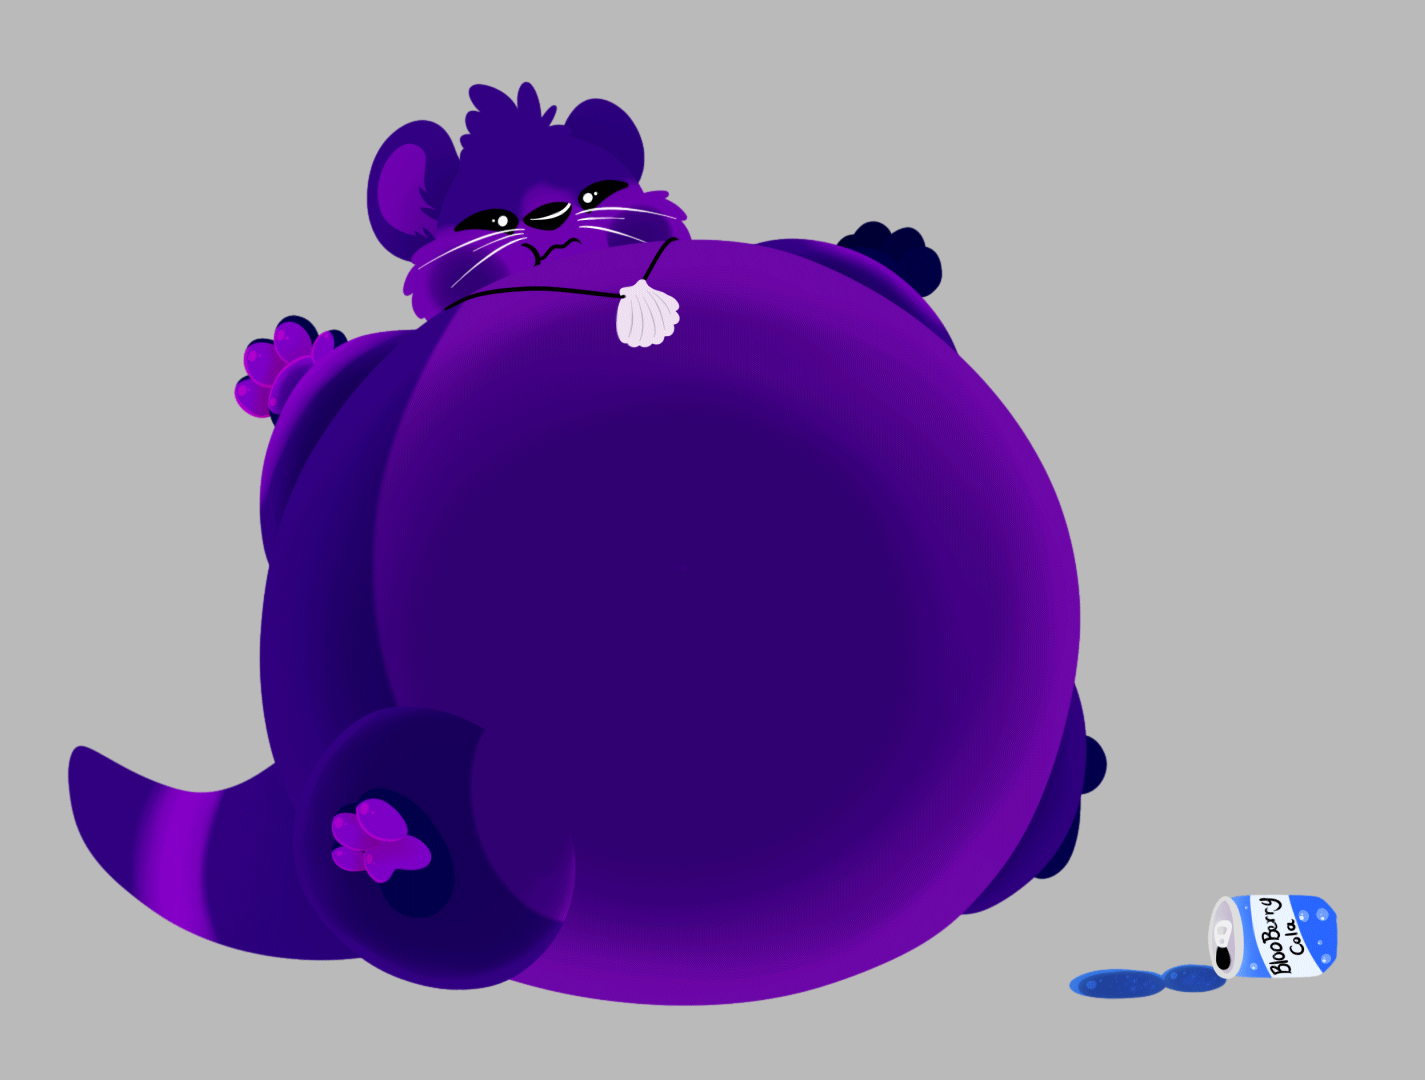 inflation animation blueberry